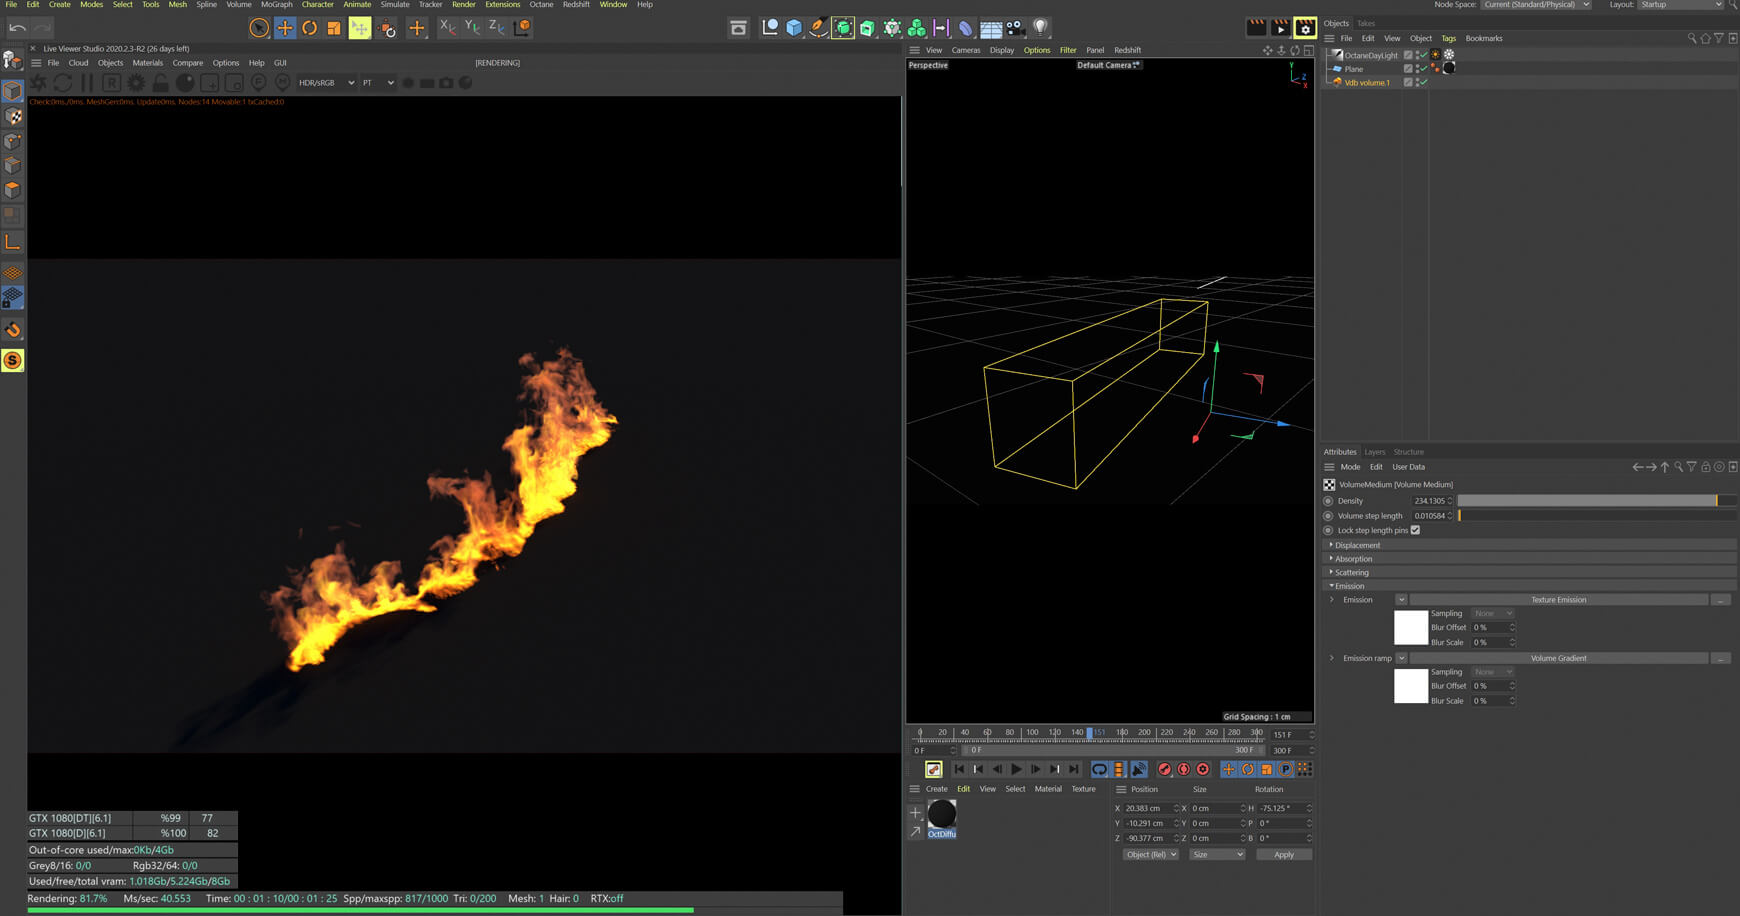 VDB Fire Pack VFX Elements